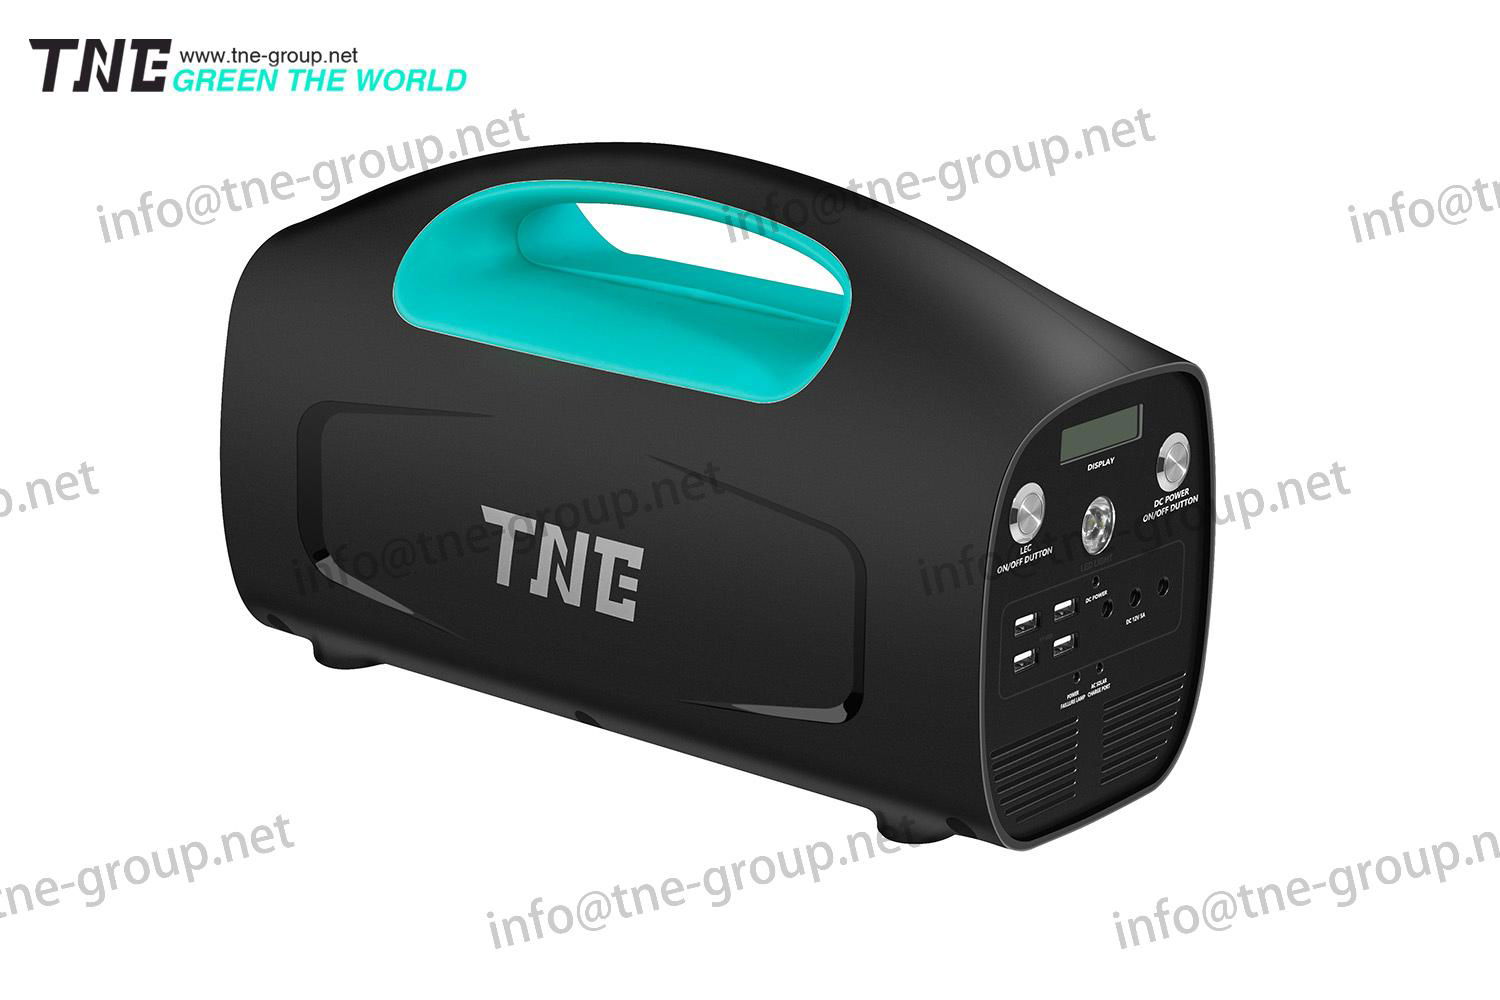 TNE solar online lithium battery ups portable generator power bank 2